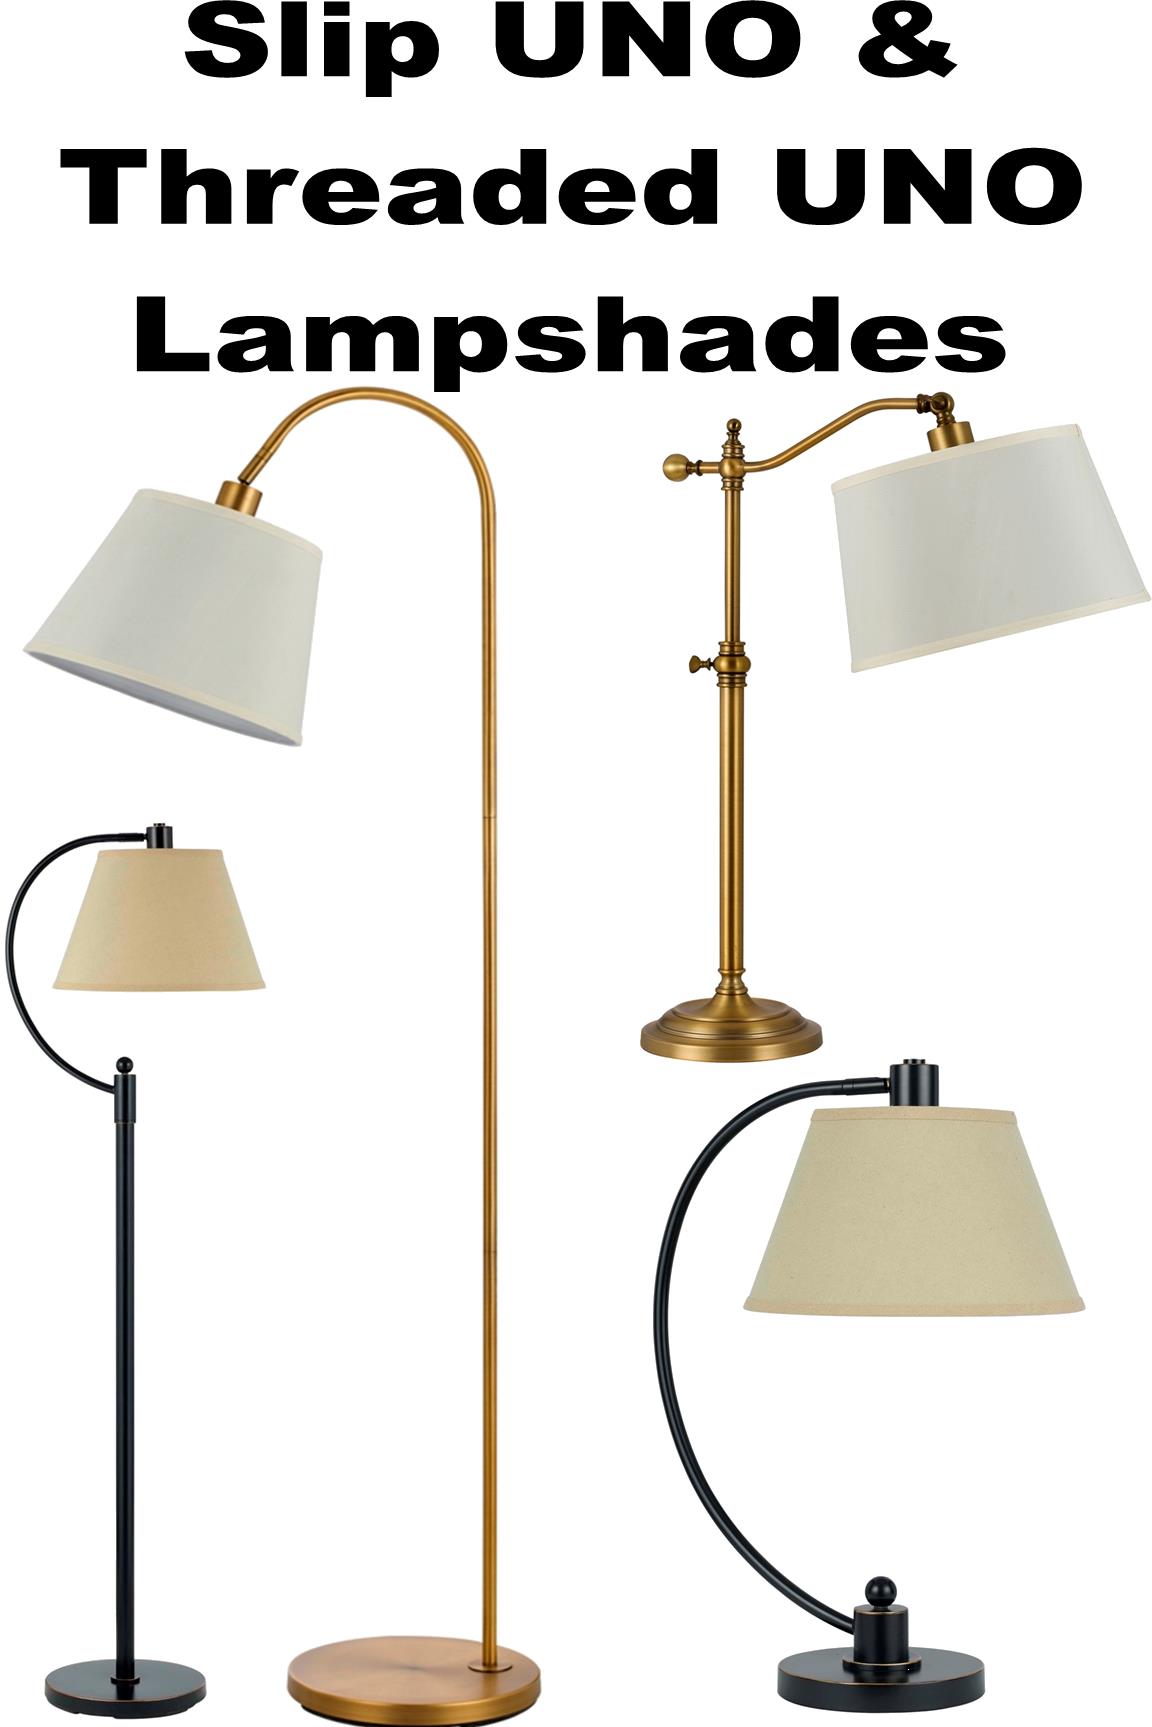 UNO Lamp Shade Examples